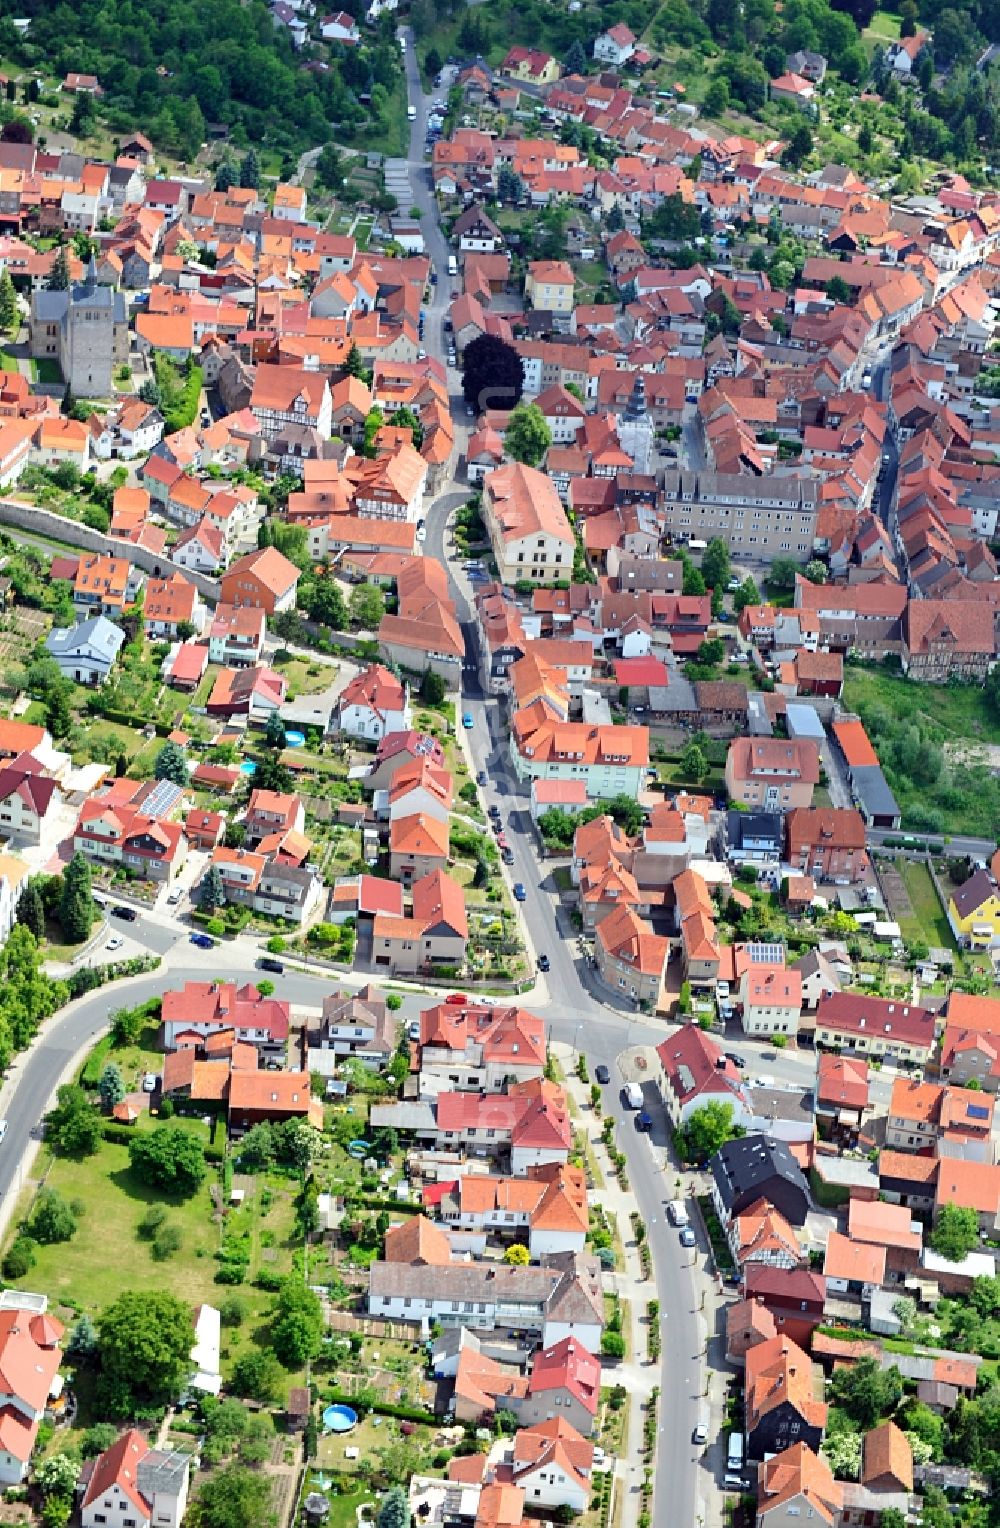 Treffurt from above - Cityscape of Treffurt in Thuringia